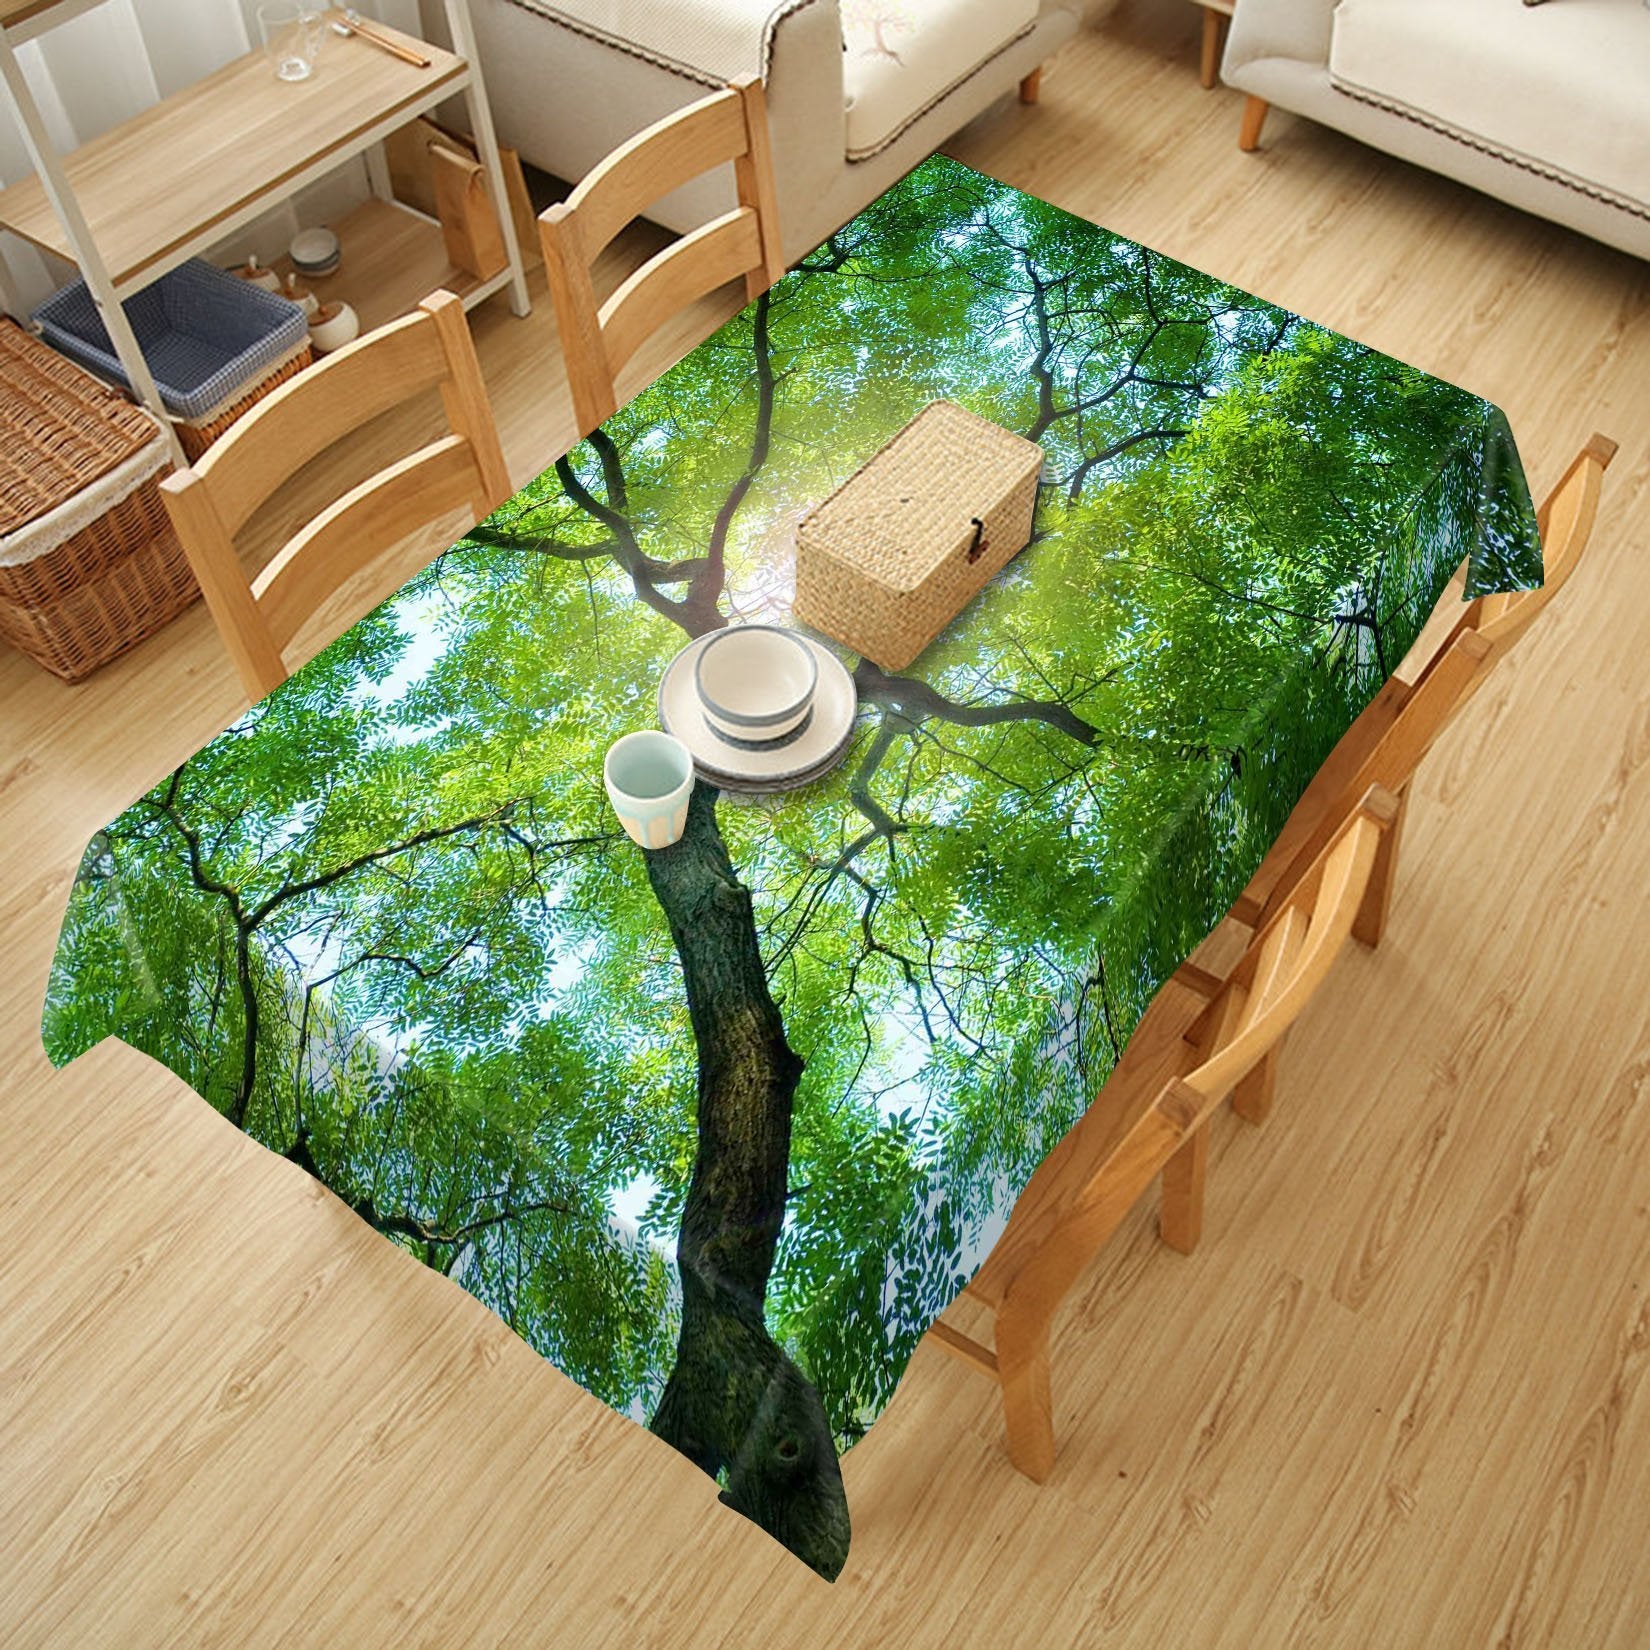 3D Lush Green Tree 496 Tablecloths Wallpaper AJ Wallpaper 